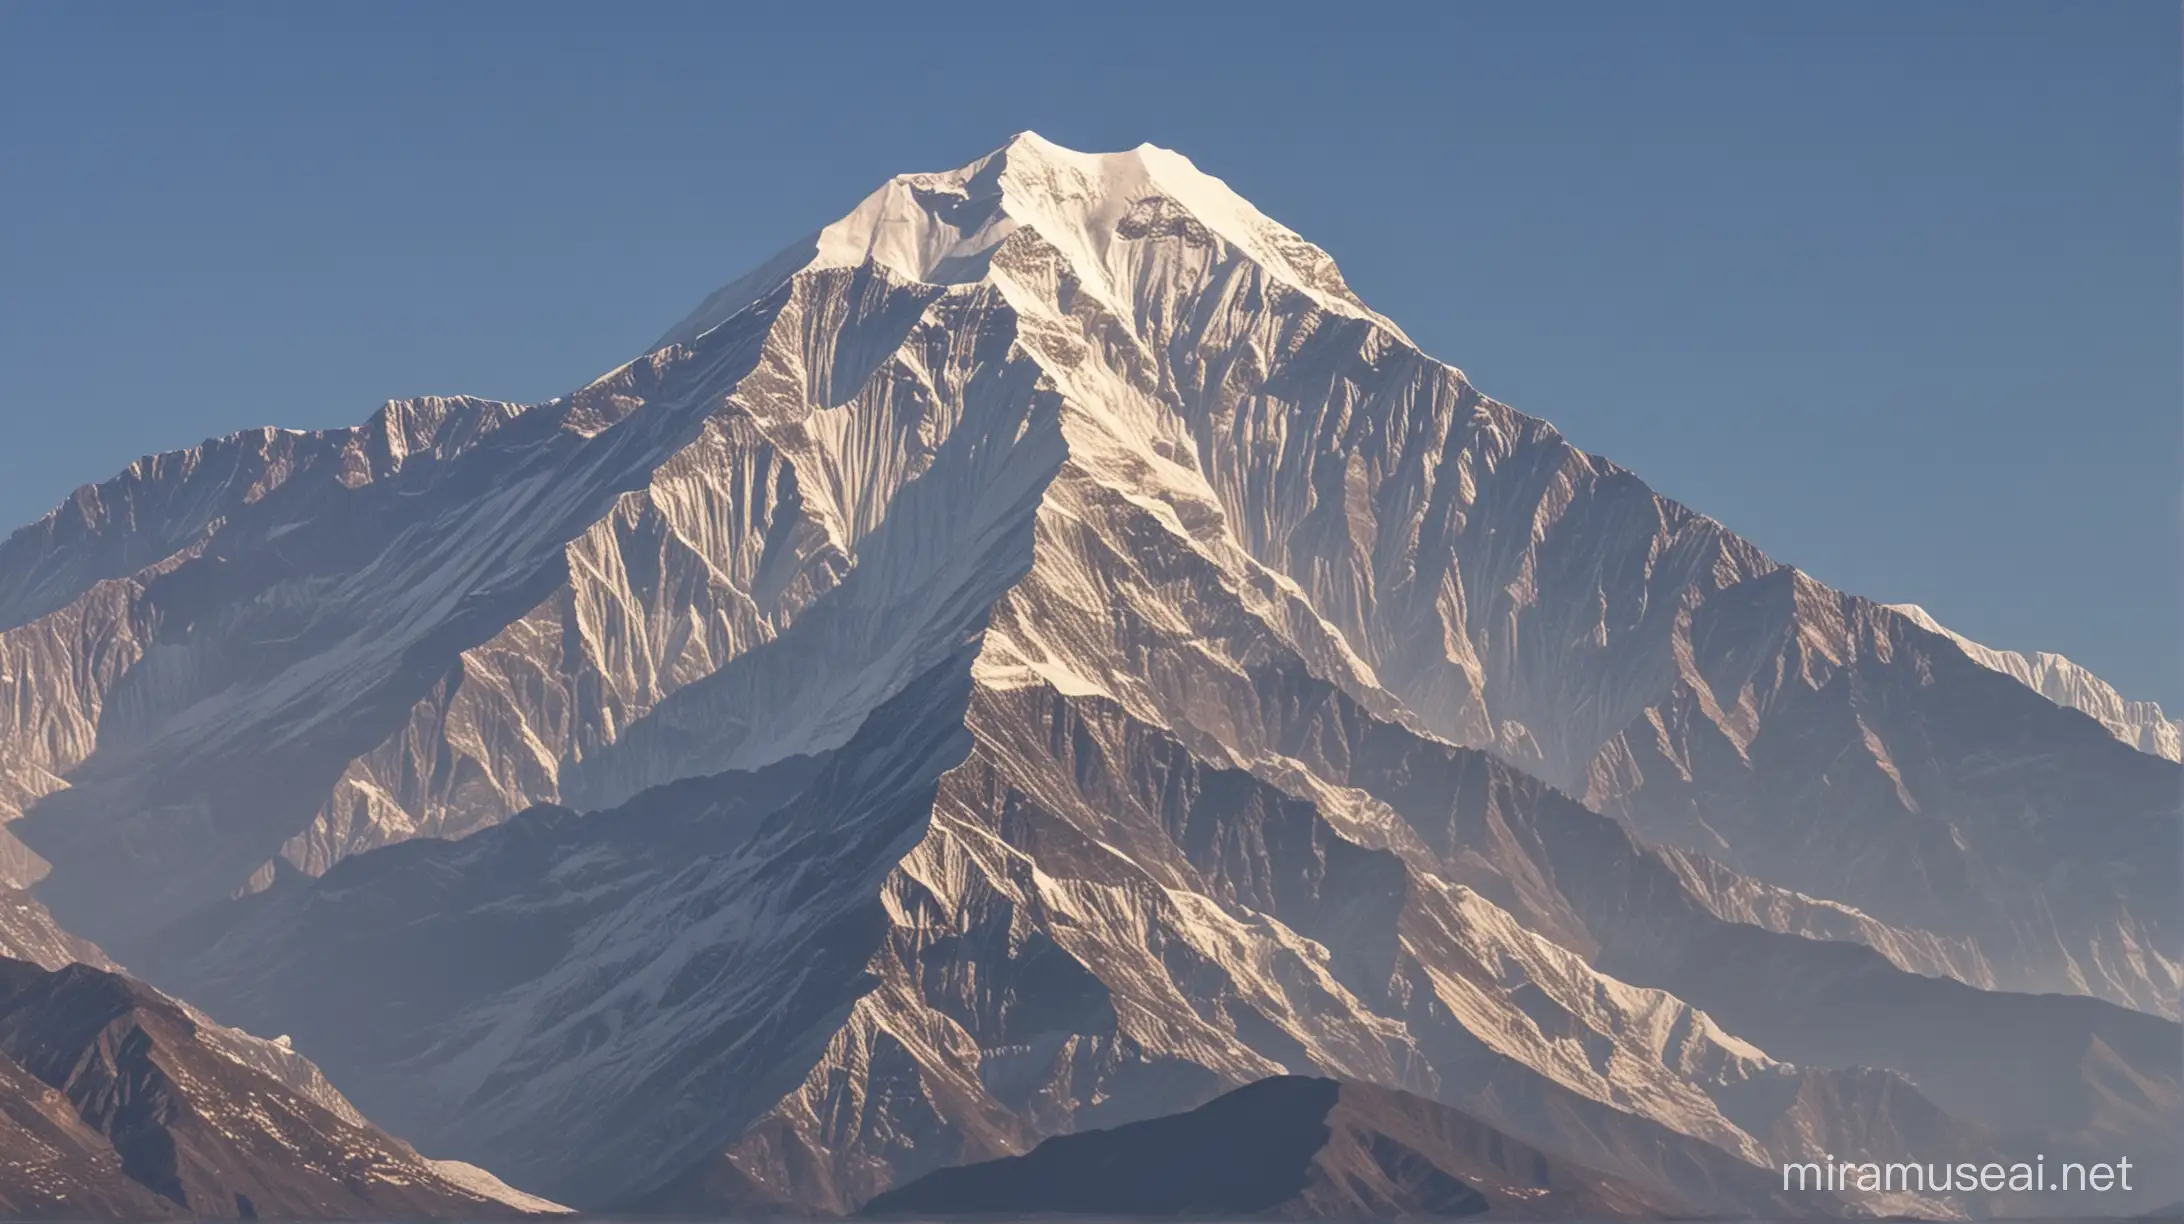 SnowCapped Majesty Dhaulagiri I Towering Over Rugged Nepalese Landscape